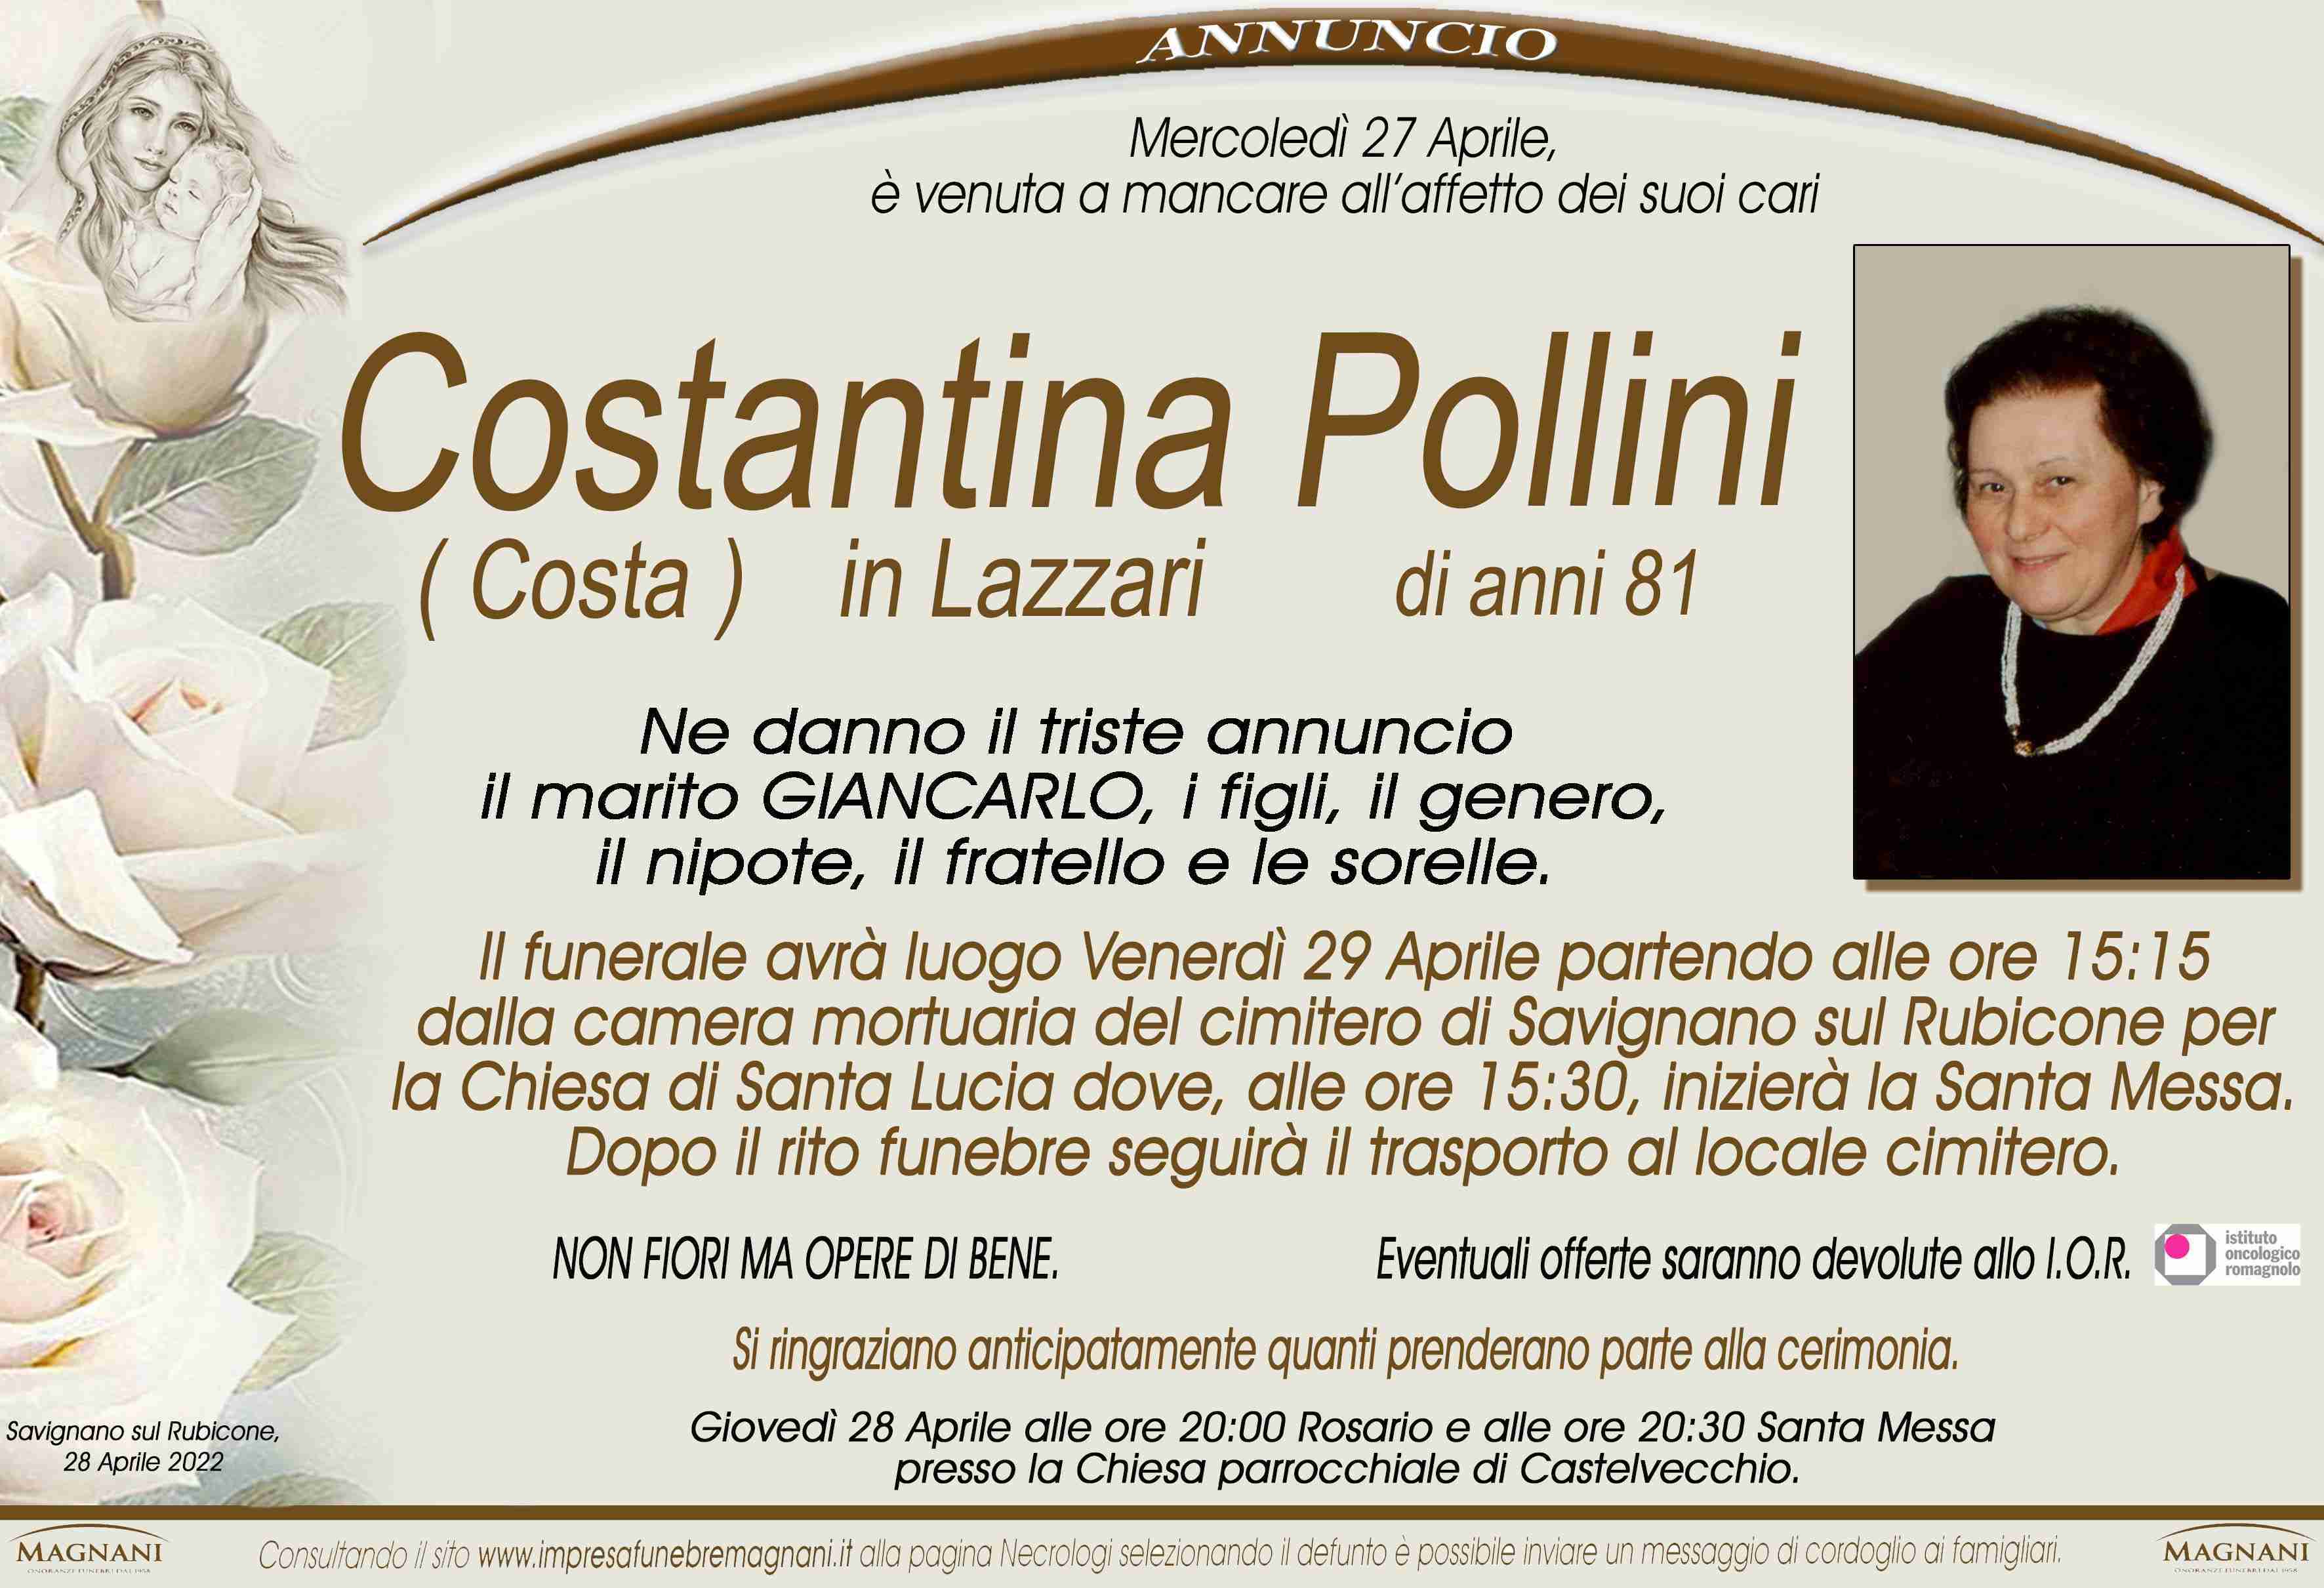 Costantina Pollini